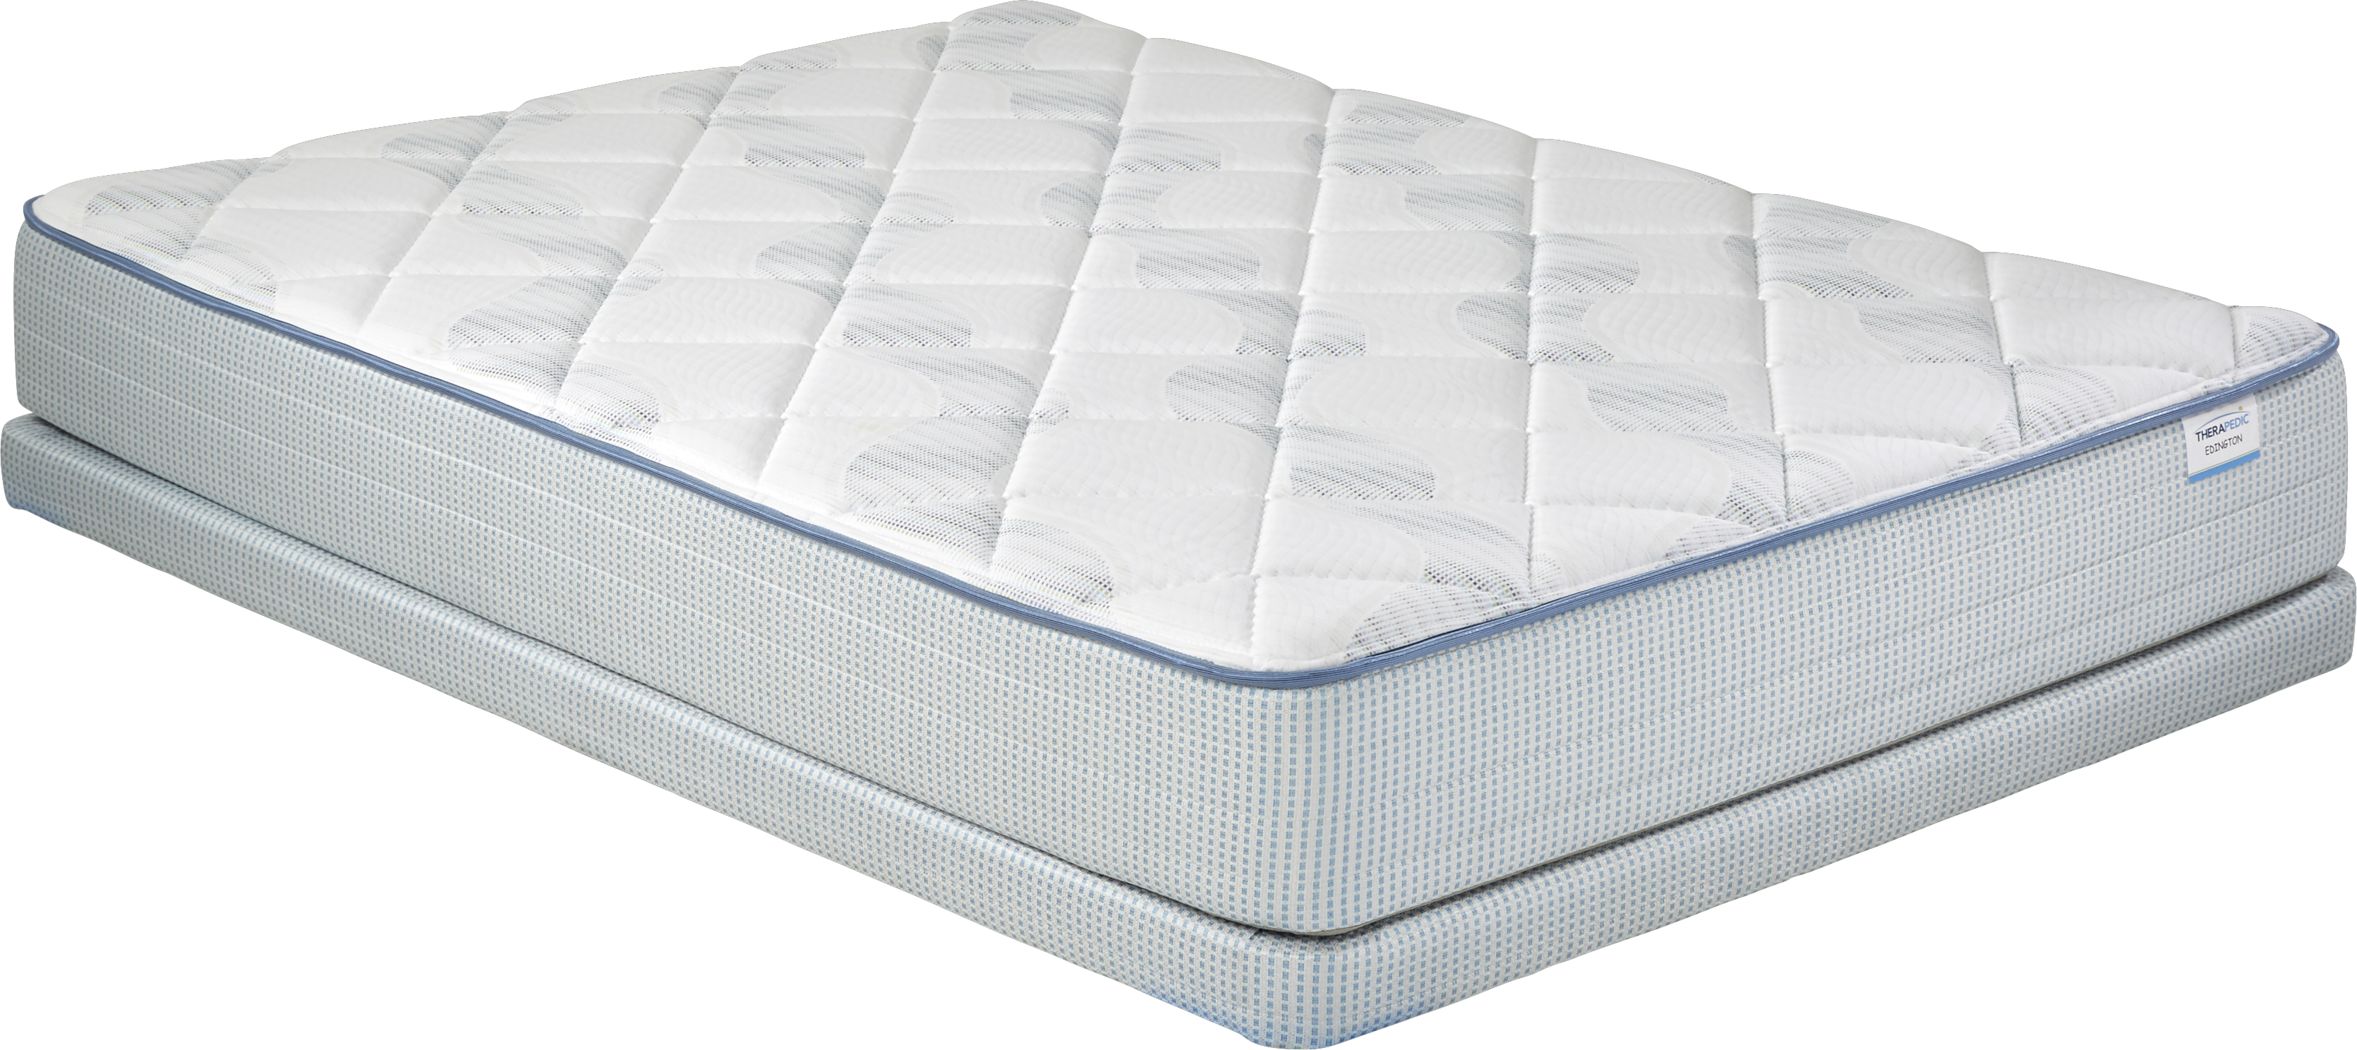 therapedic escapade full mattress set review